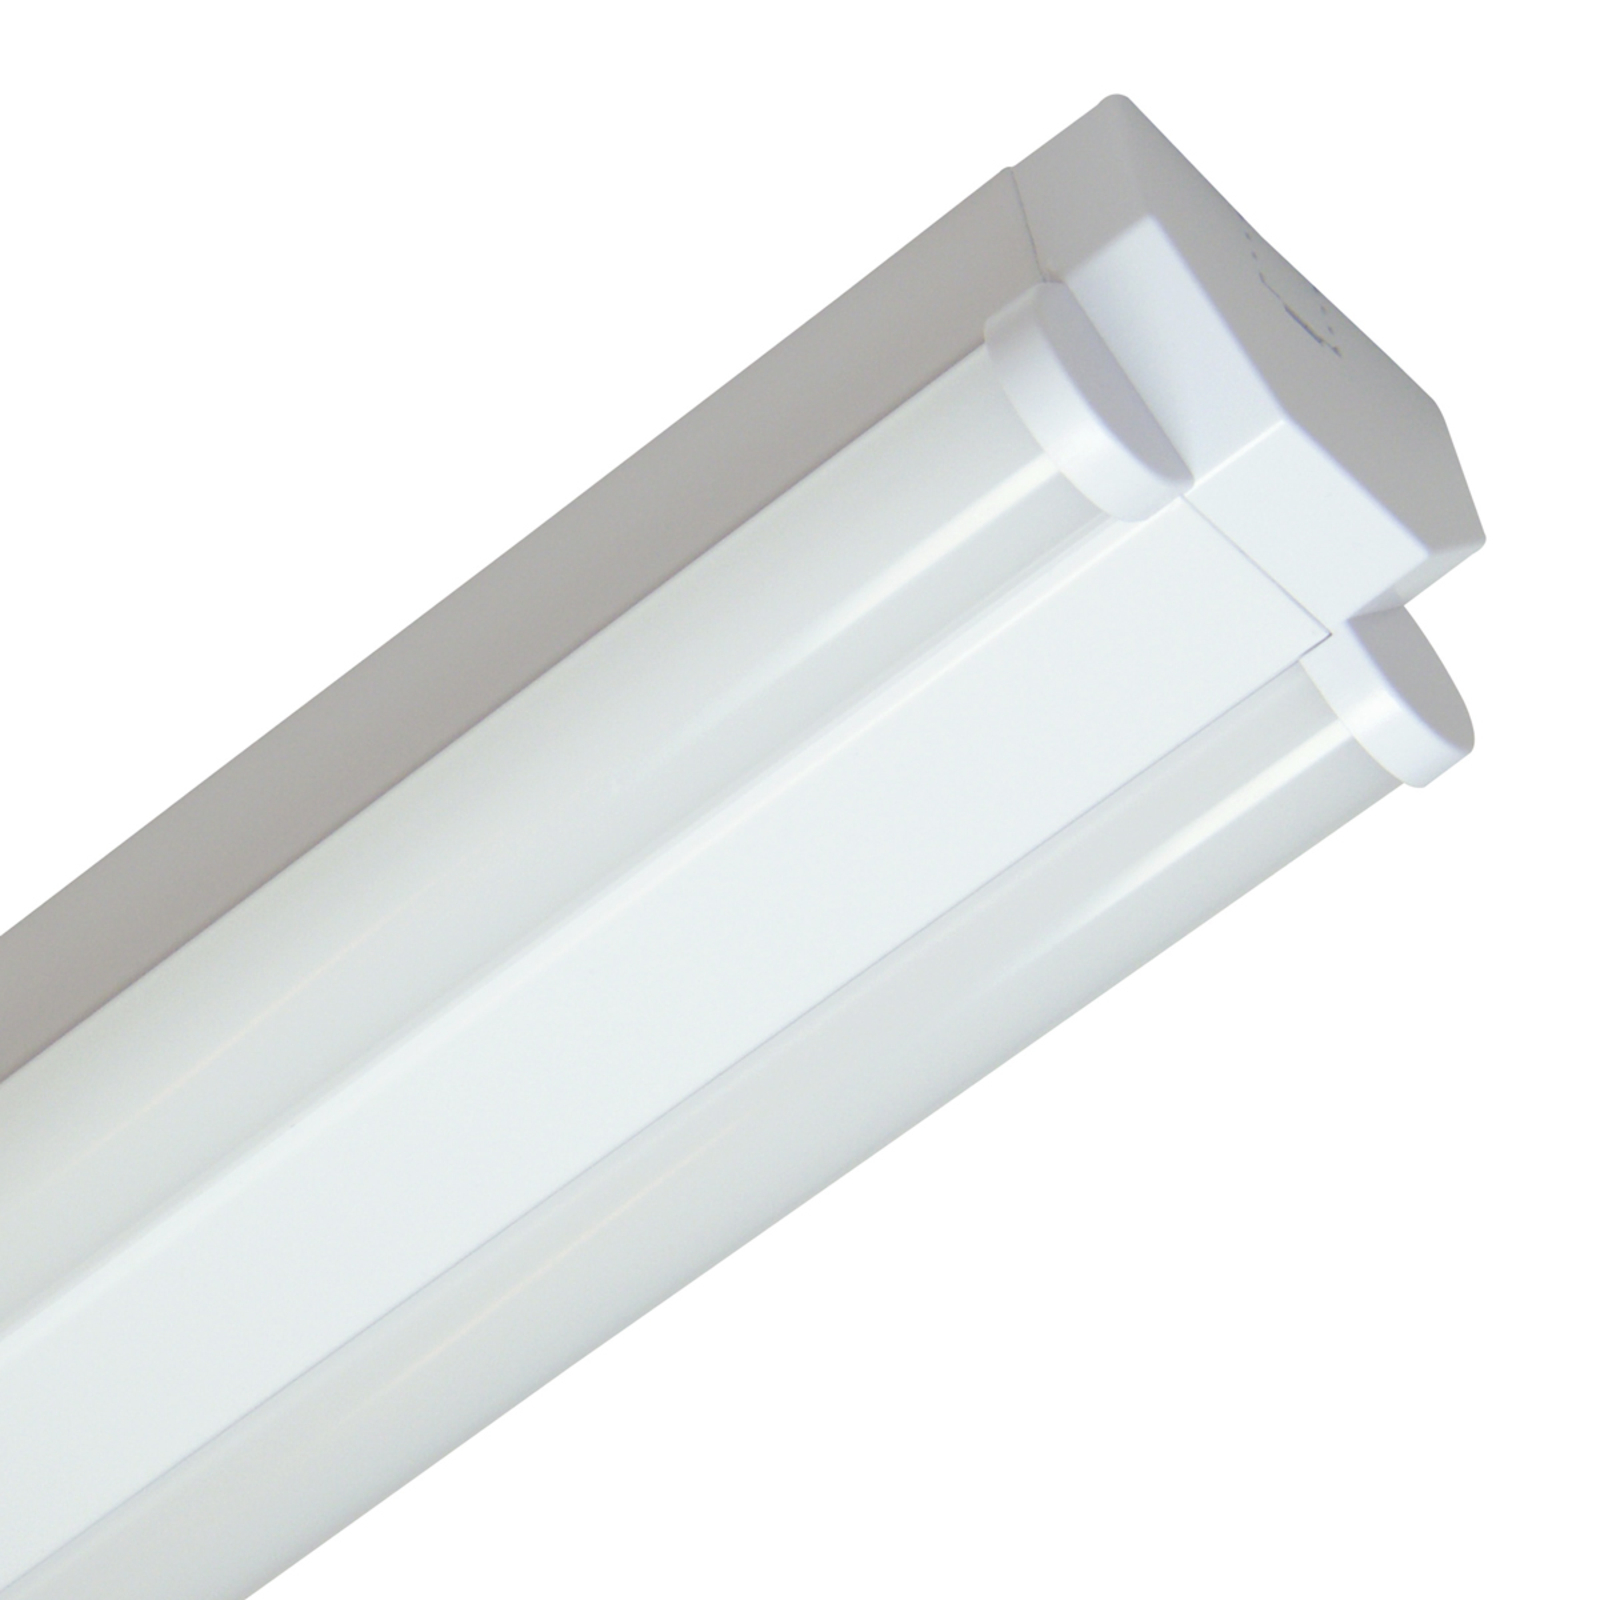 Basic 2 - zweiflammige LED-Deckenlampe 120cm